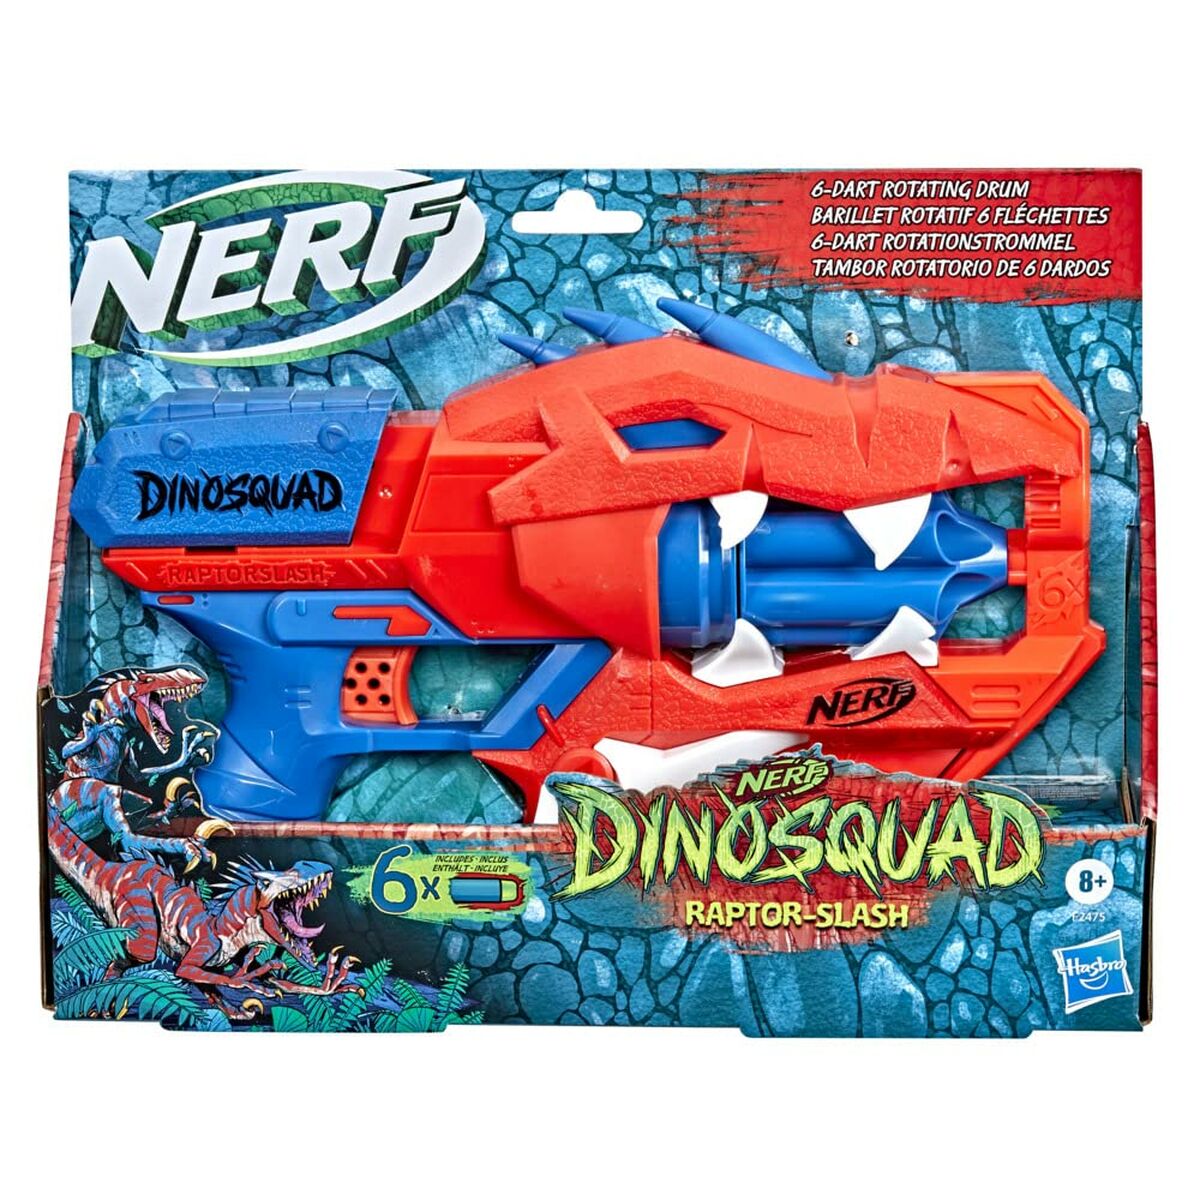 Pistool met pijltjes Nerf DinoSquad Raptor-Slash